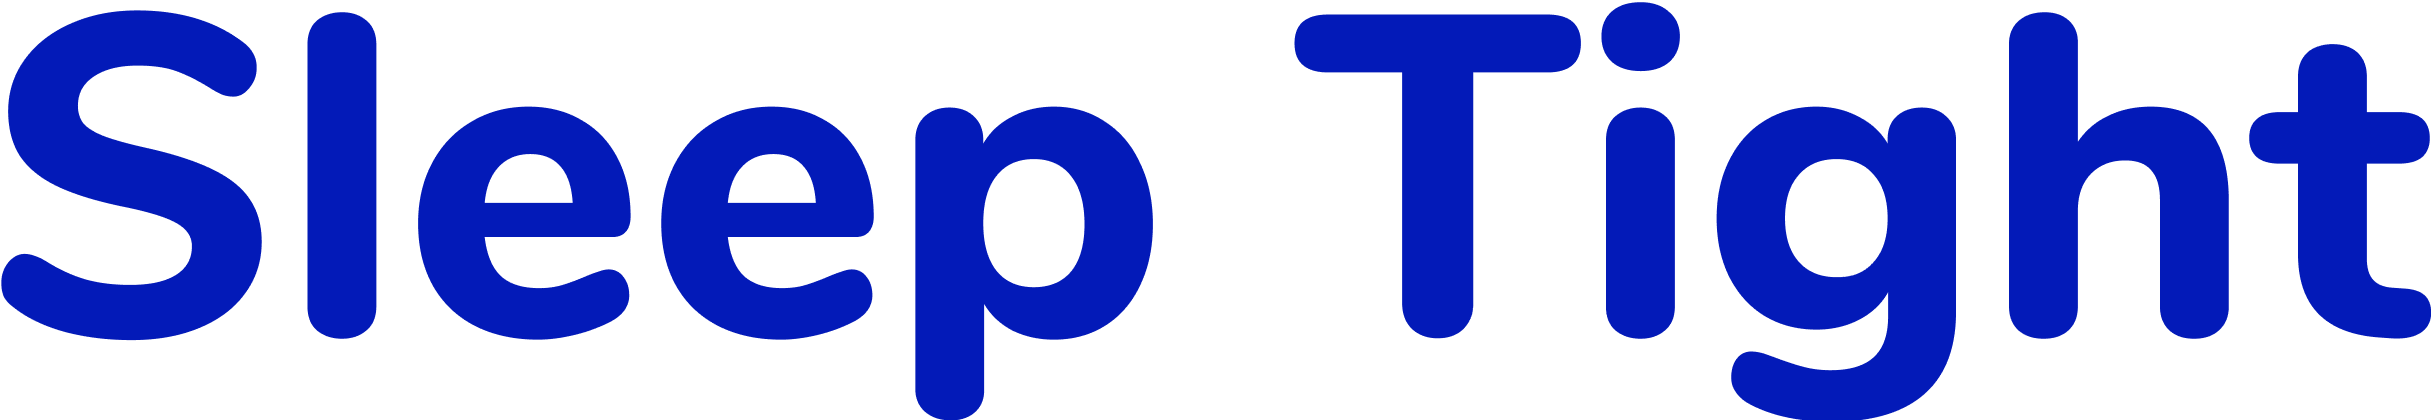 sleeptight_logo